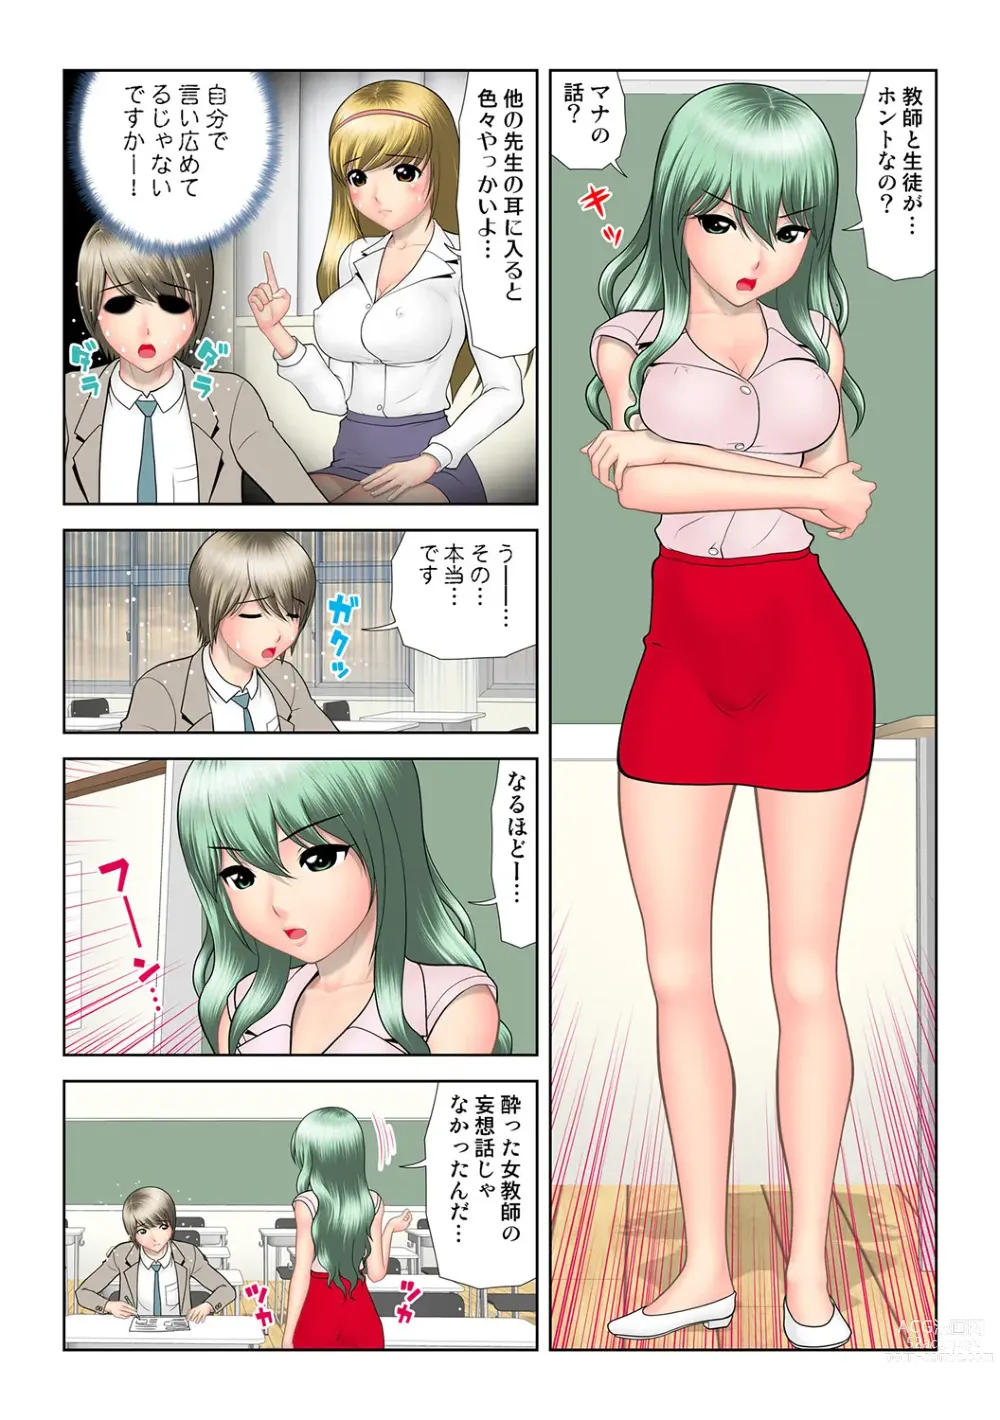 Page 106 of manga HiME-Mania Vol. 46